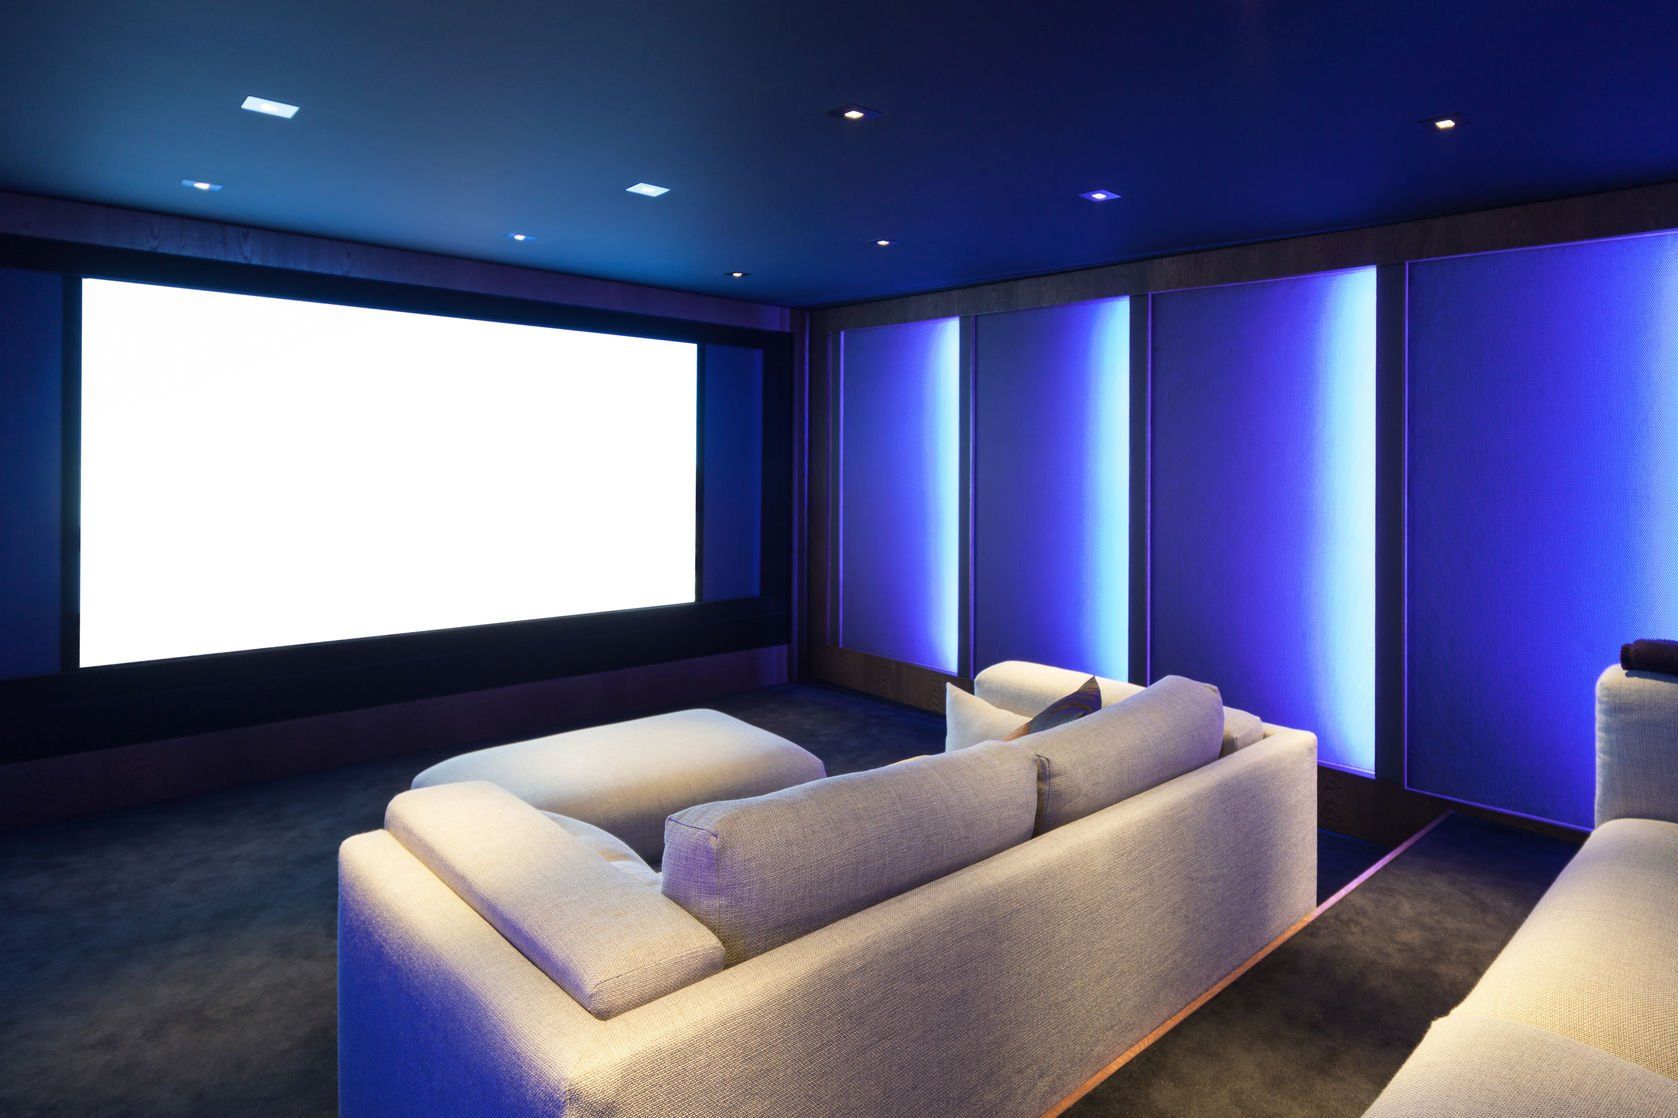 Cinema rooms